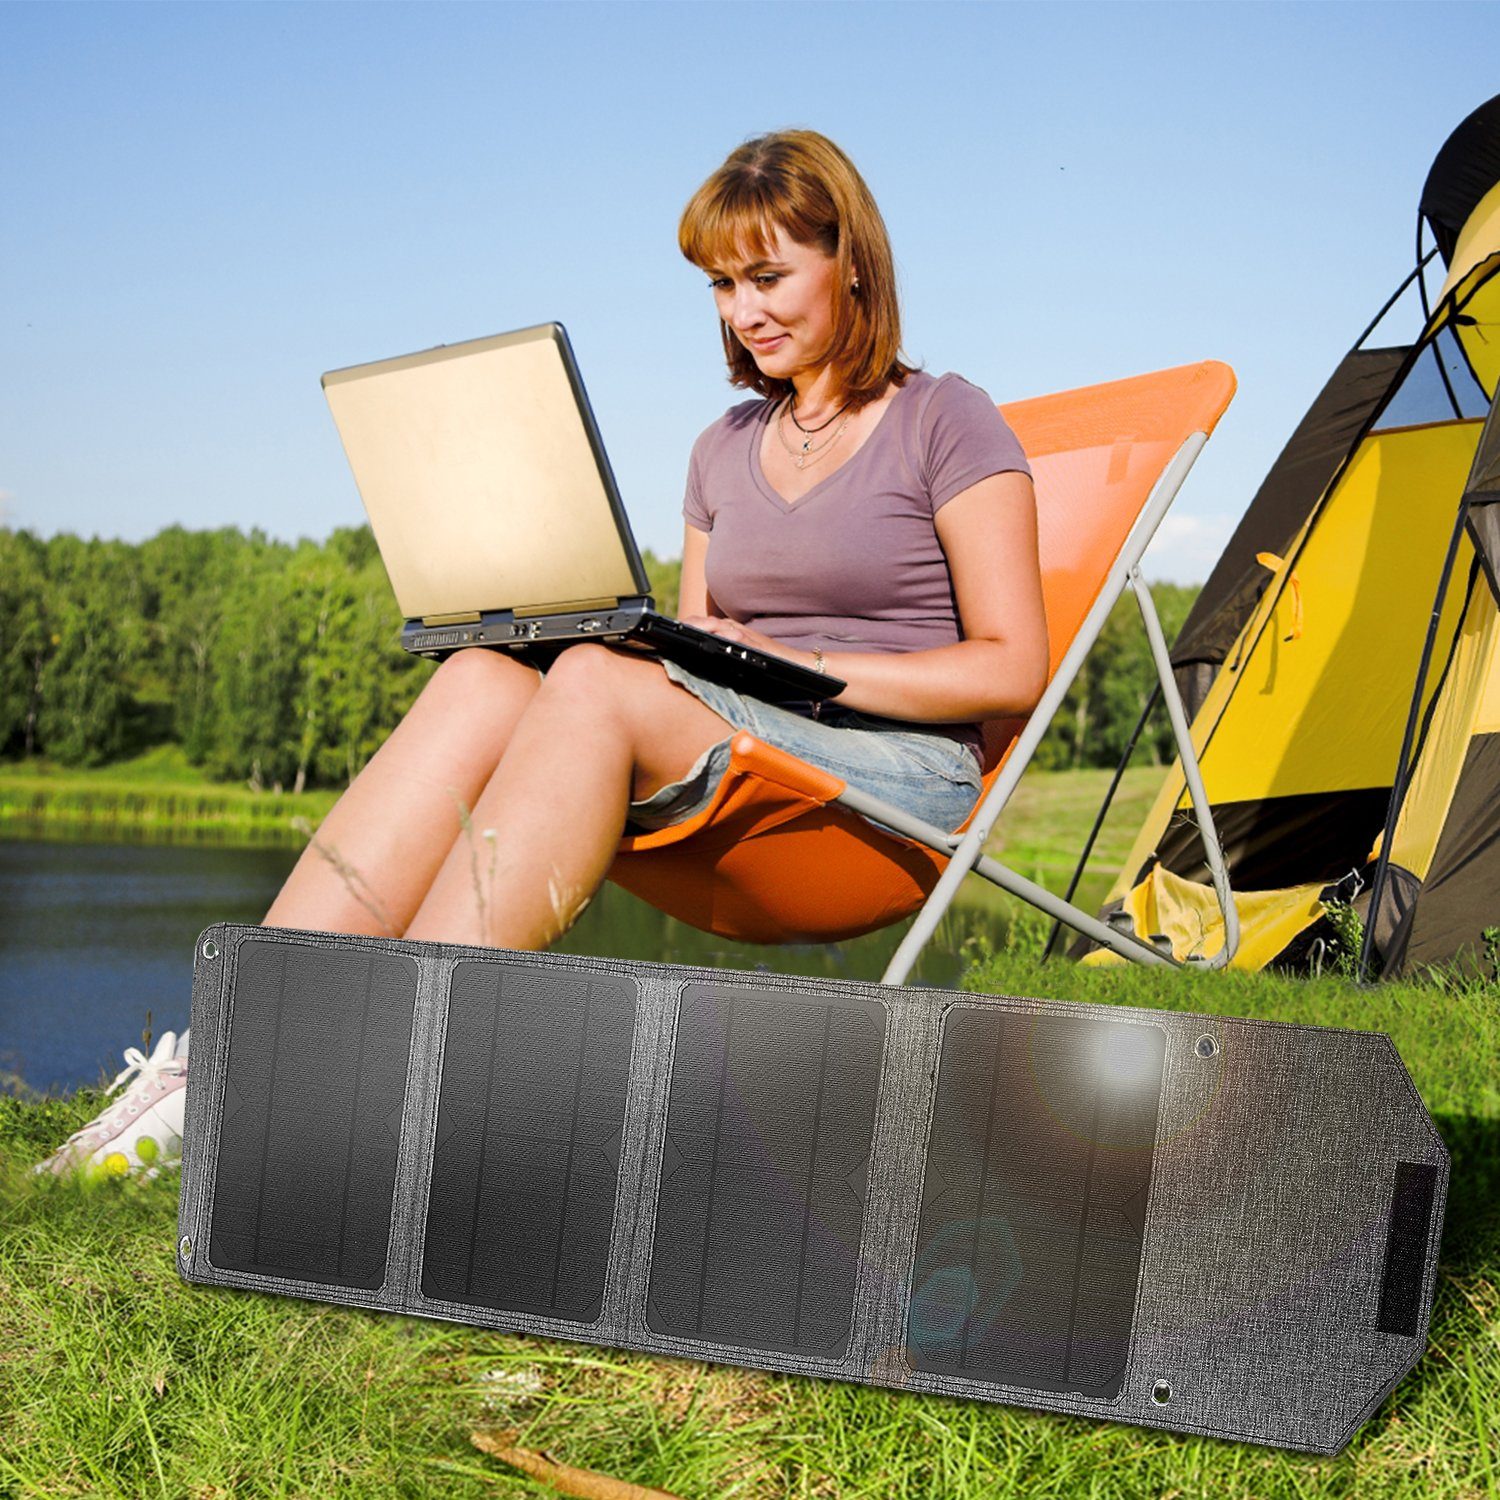 LETGOSPT Solarmodul Solar Wandern, für Ladegerät 24W Camping, Powerbank Outdoor faltbar, Standard-USB-Ausgang Solarpanel Solarladegerät, IP65